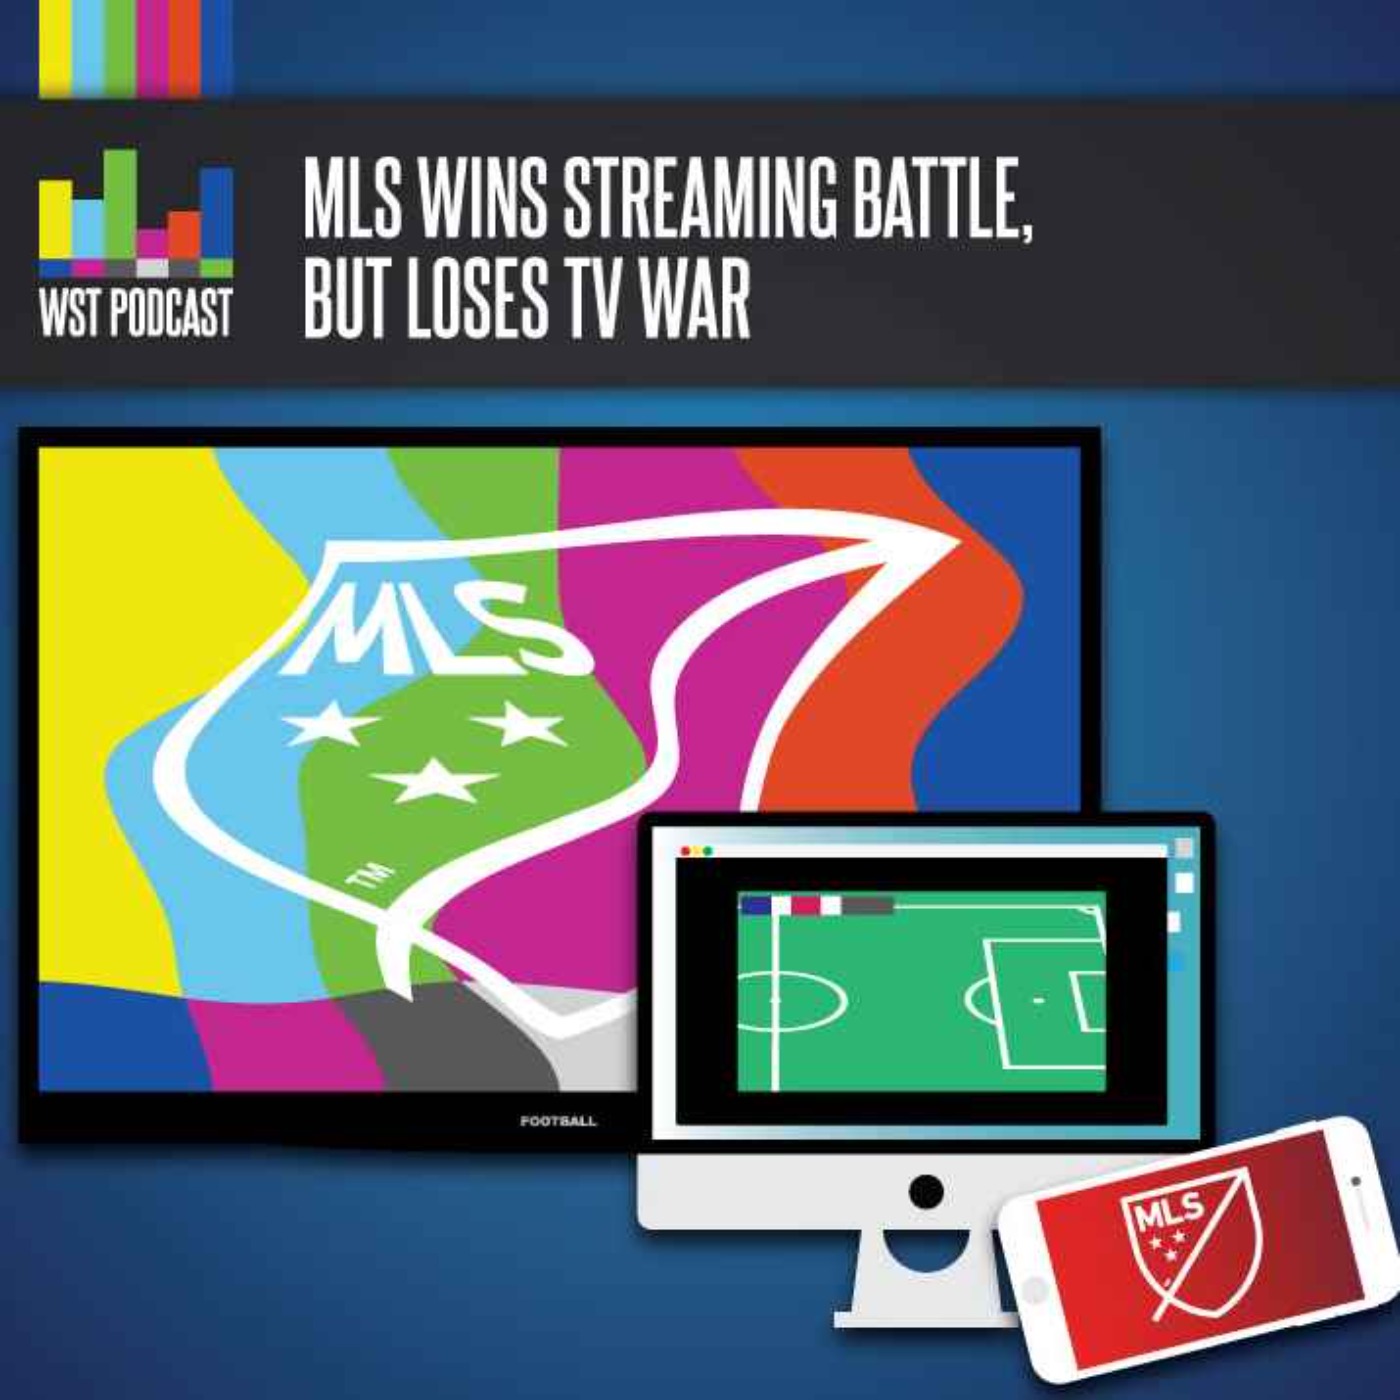 MLS wins streaming battle but loses TV war